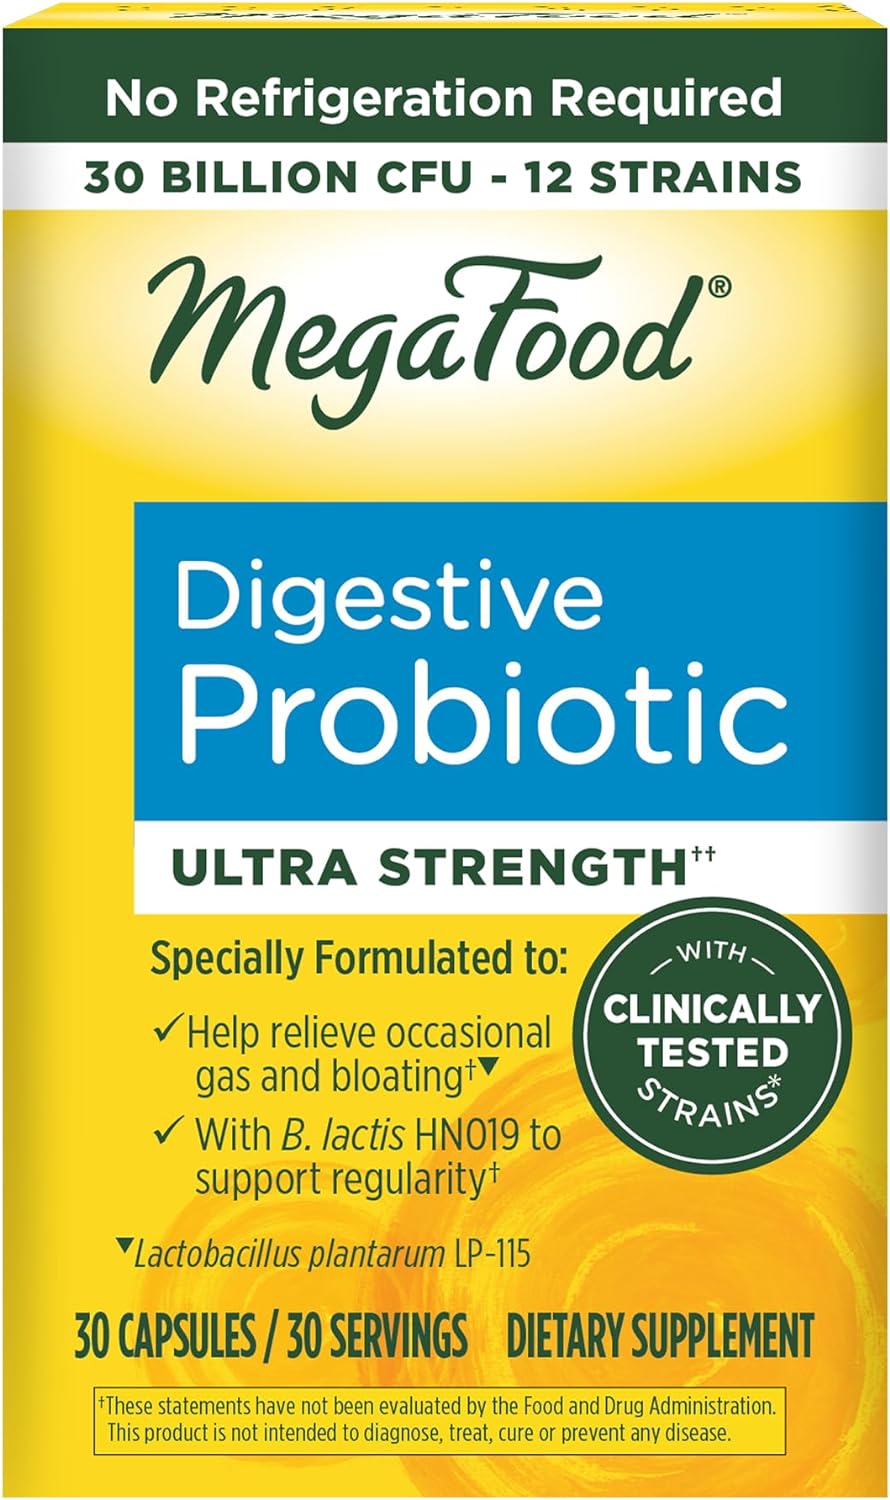 MegaFood Digestive Probiotic - 12 Strain Vegetarian Probiotics for Women & Men, 30 Billion CFUs, Support Gut Health, Probiotics for Digestive Health Help Relieve Occasional Gas & Bloating, 30 Capsules